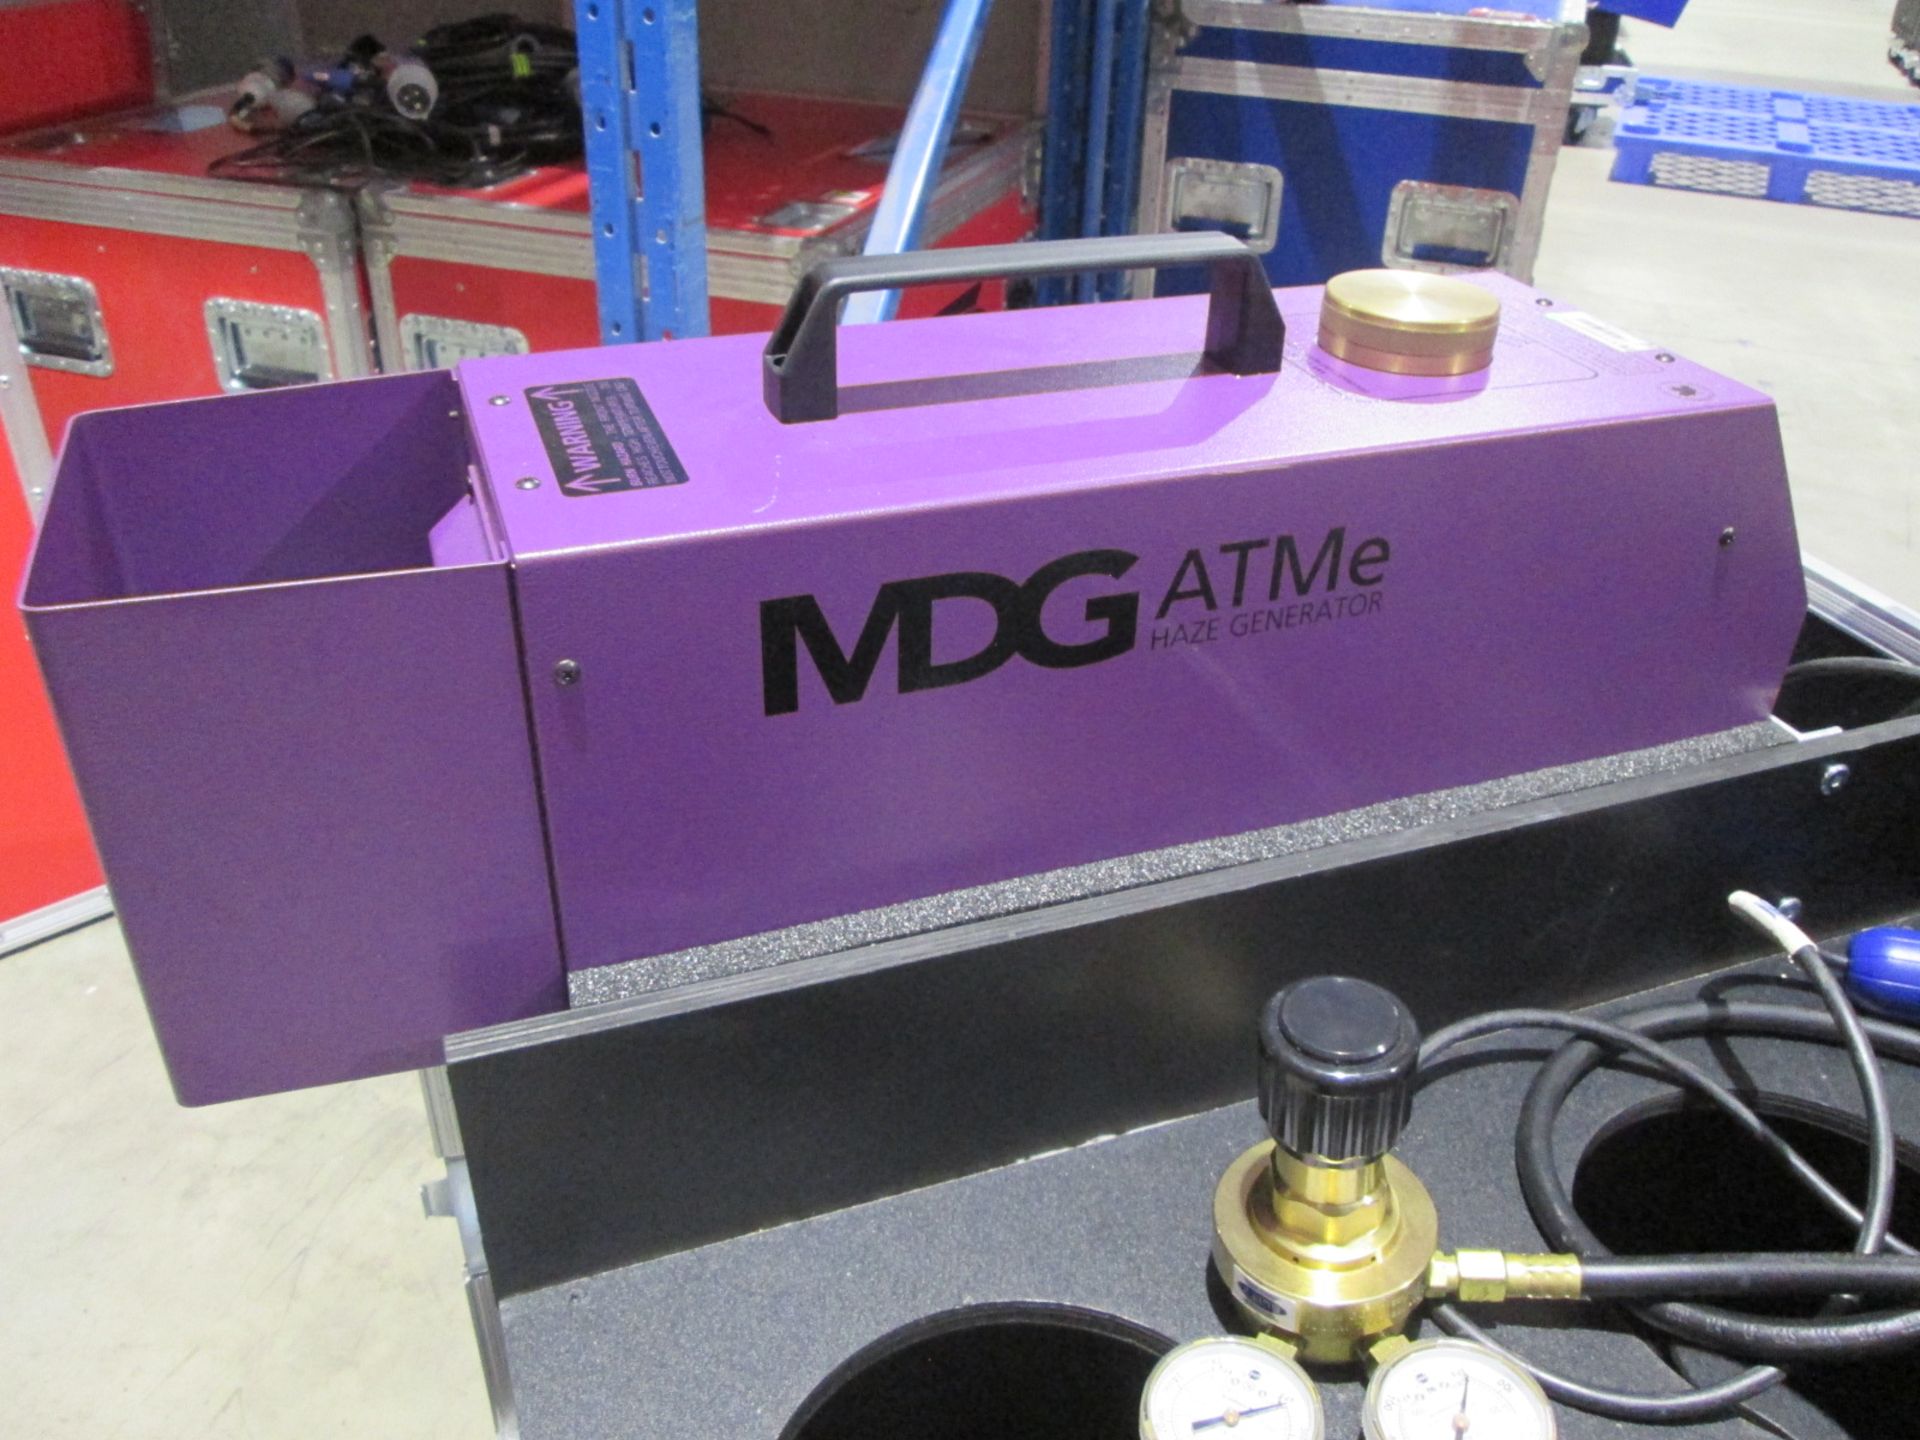 MDG ATMe APS Haze Generator. In flight case. S/N ATMe18981 - Image 2 of 11